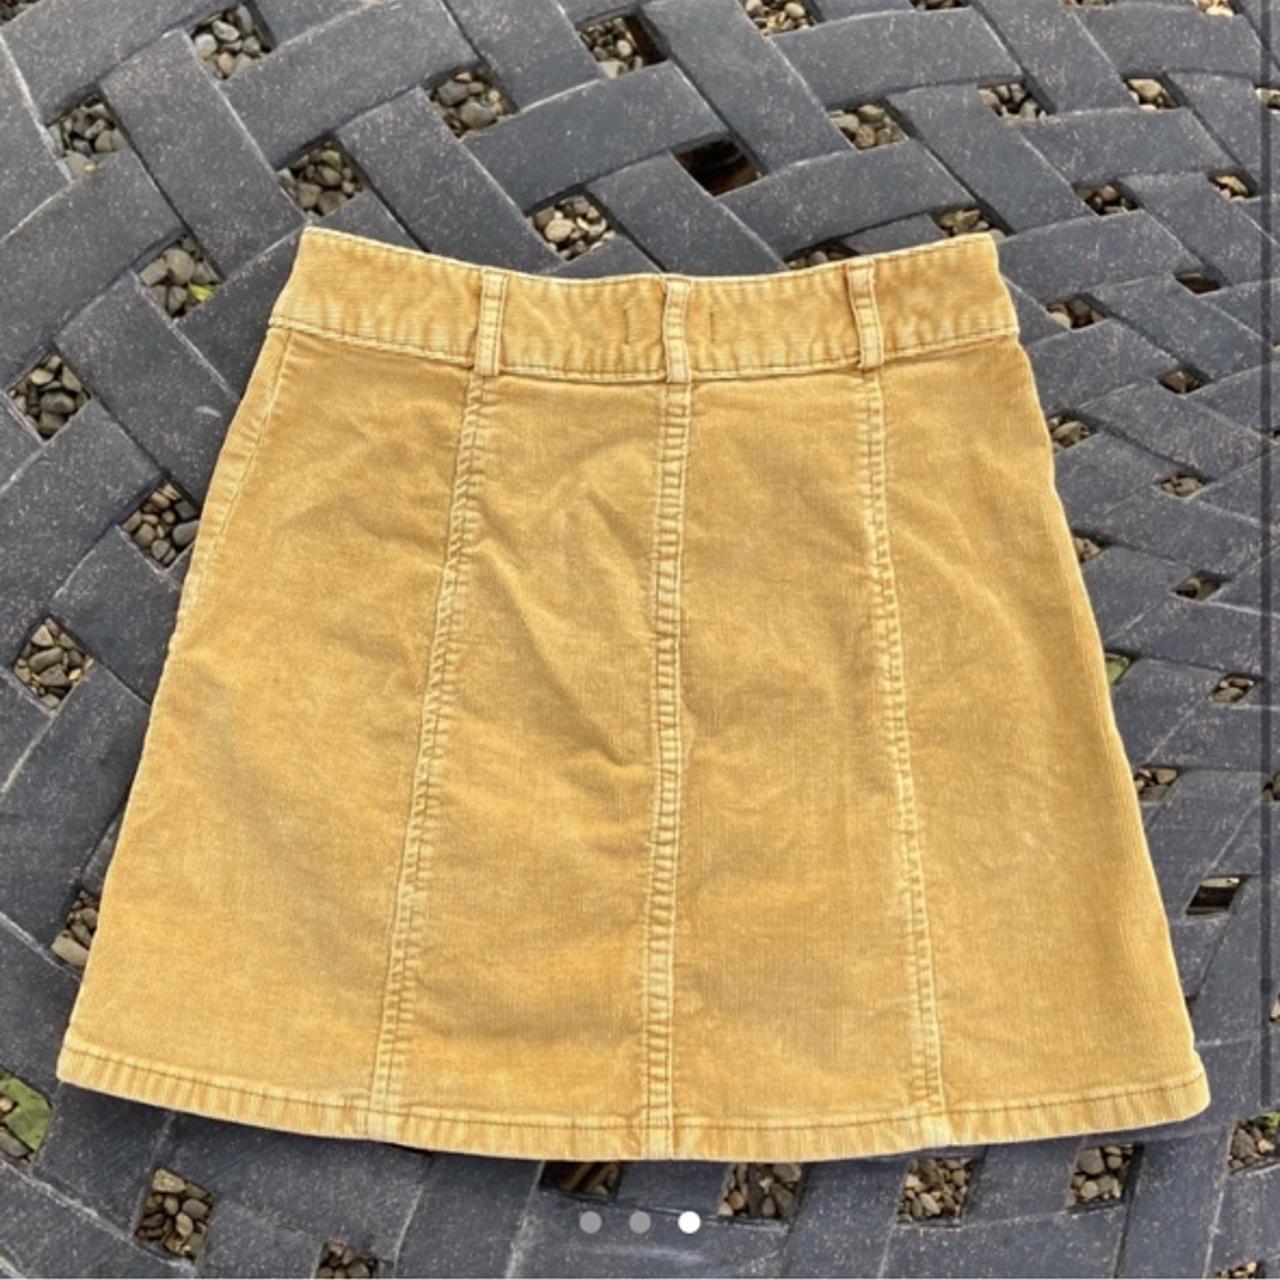 70’s mini skirt 🌟 Really cute mustard yellow... - Depop